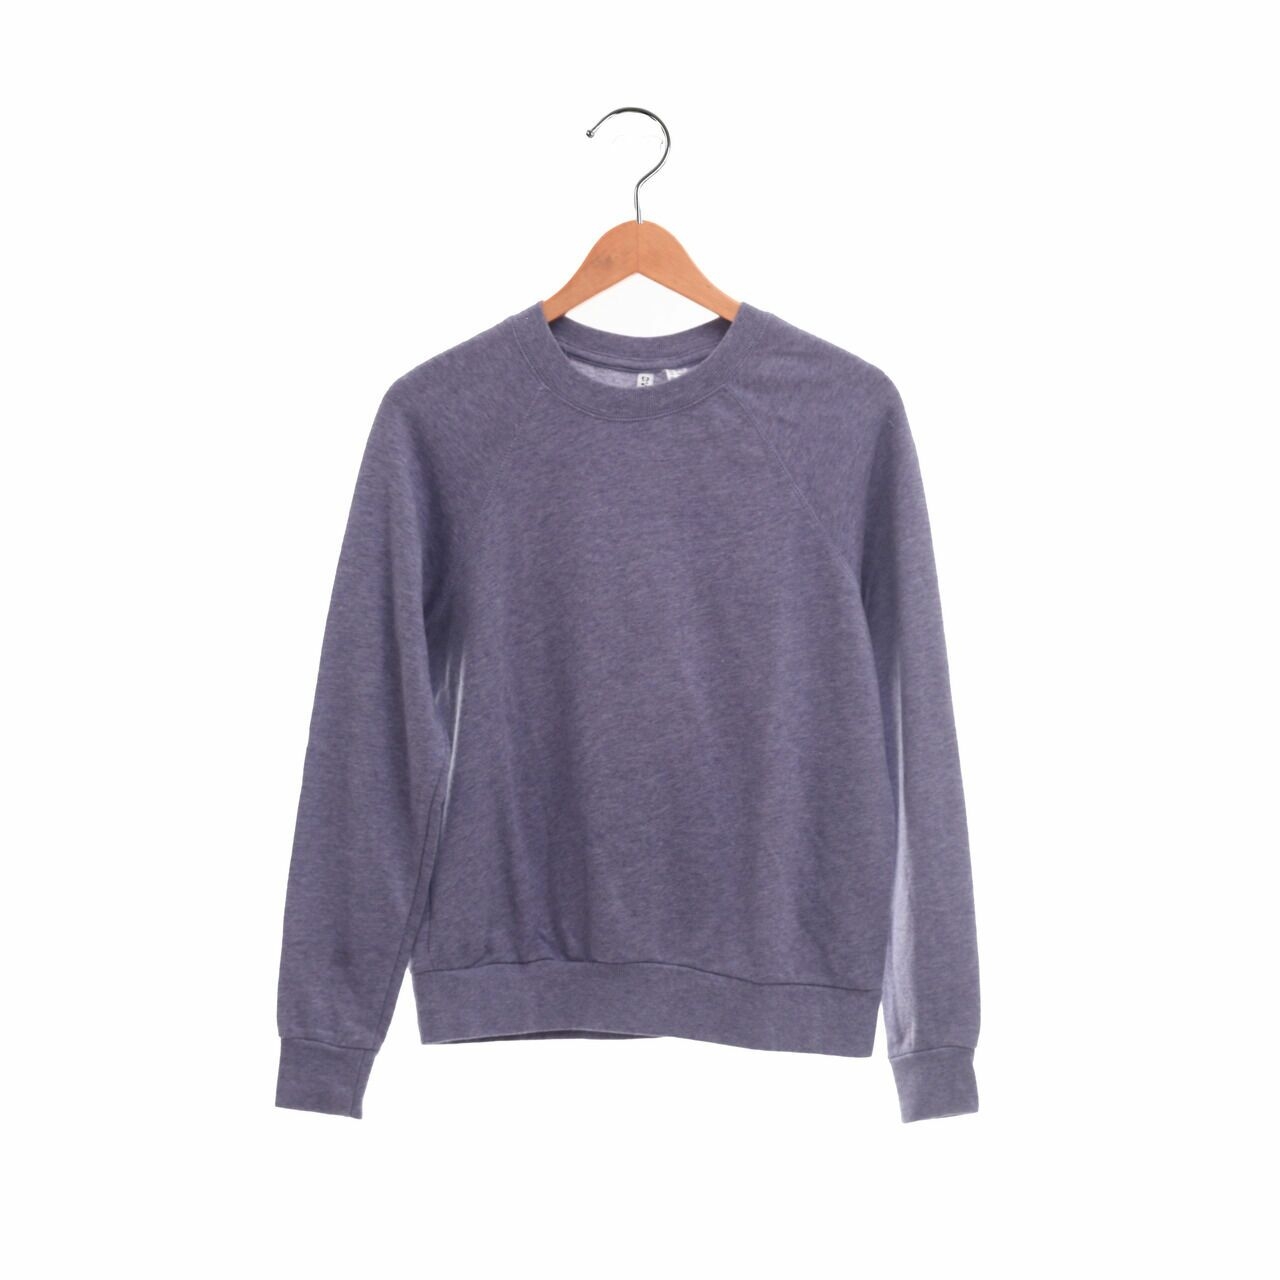 H&M Purple Sweater